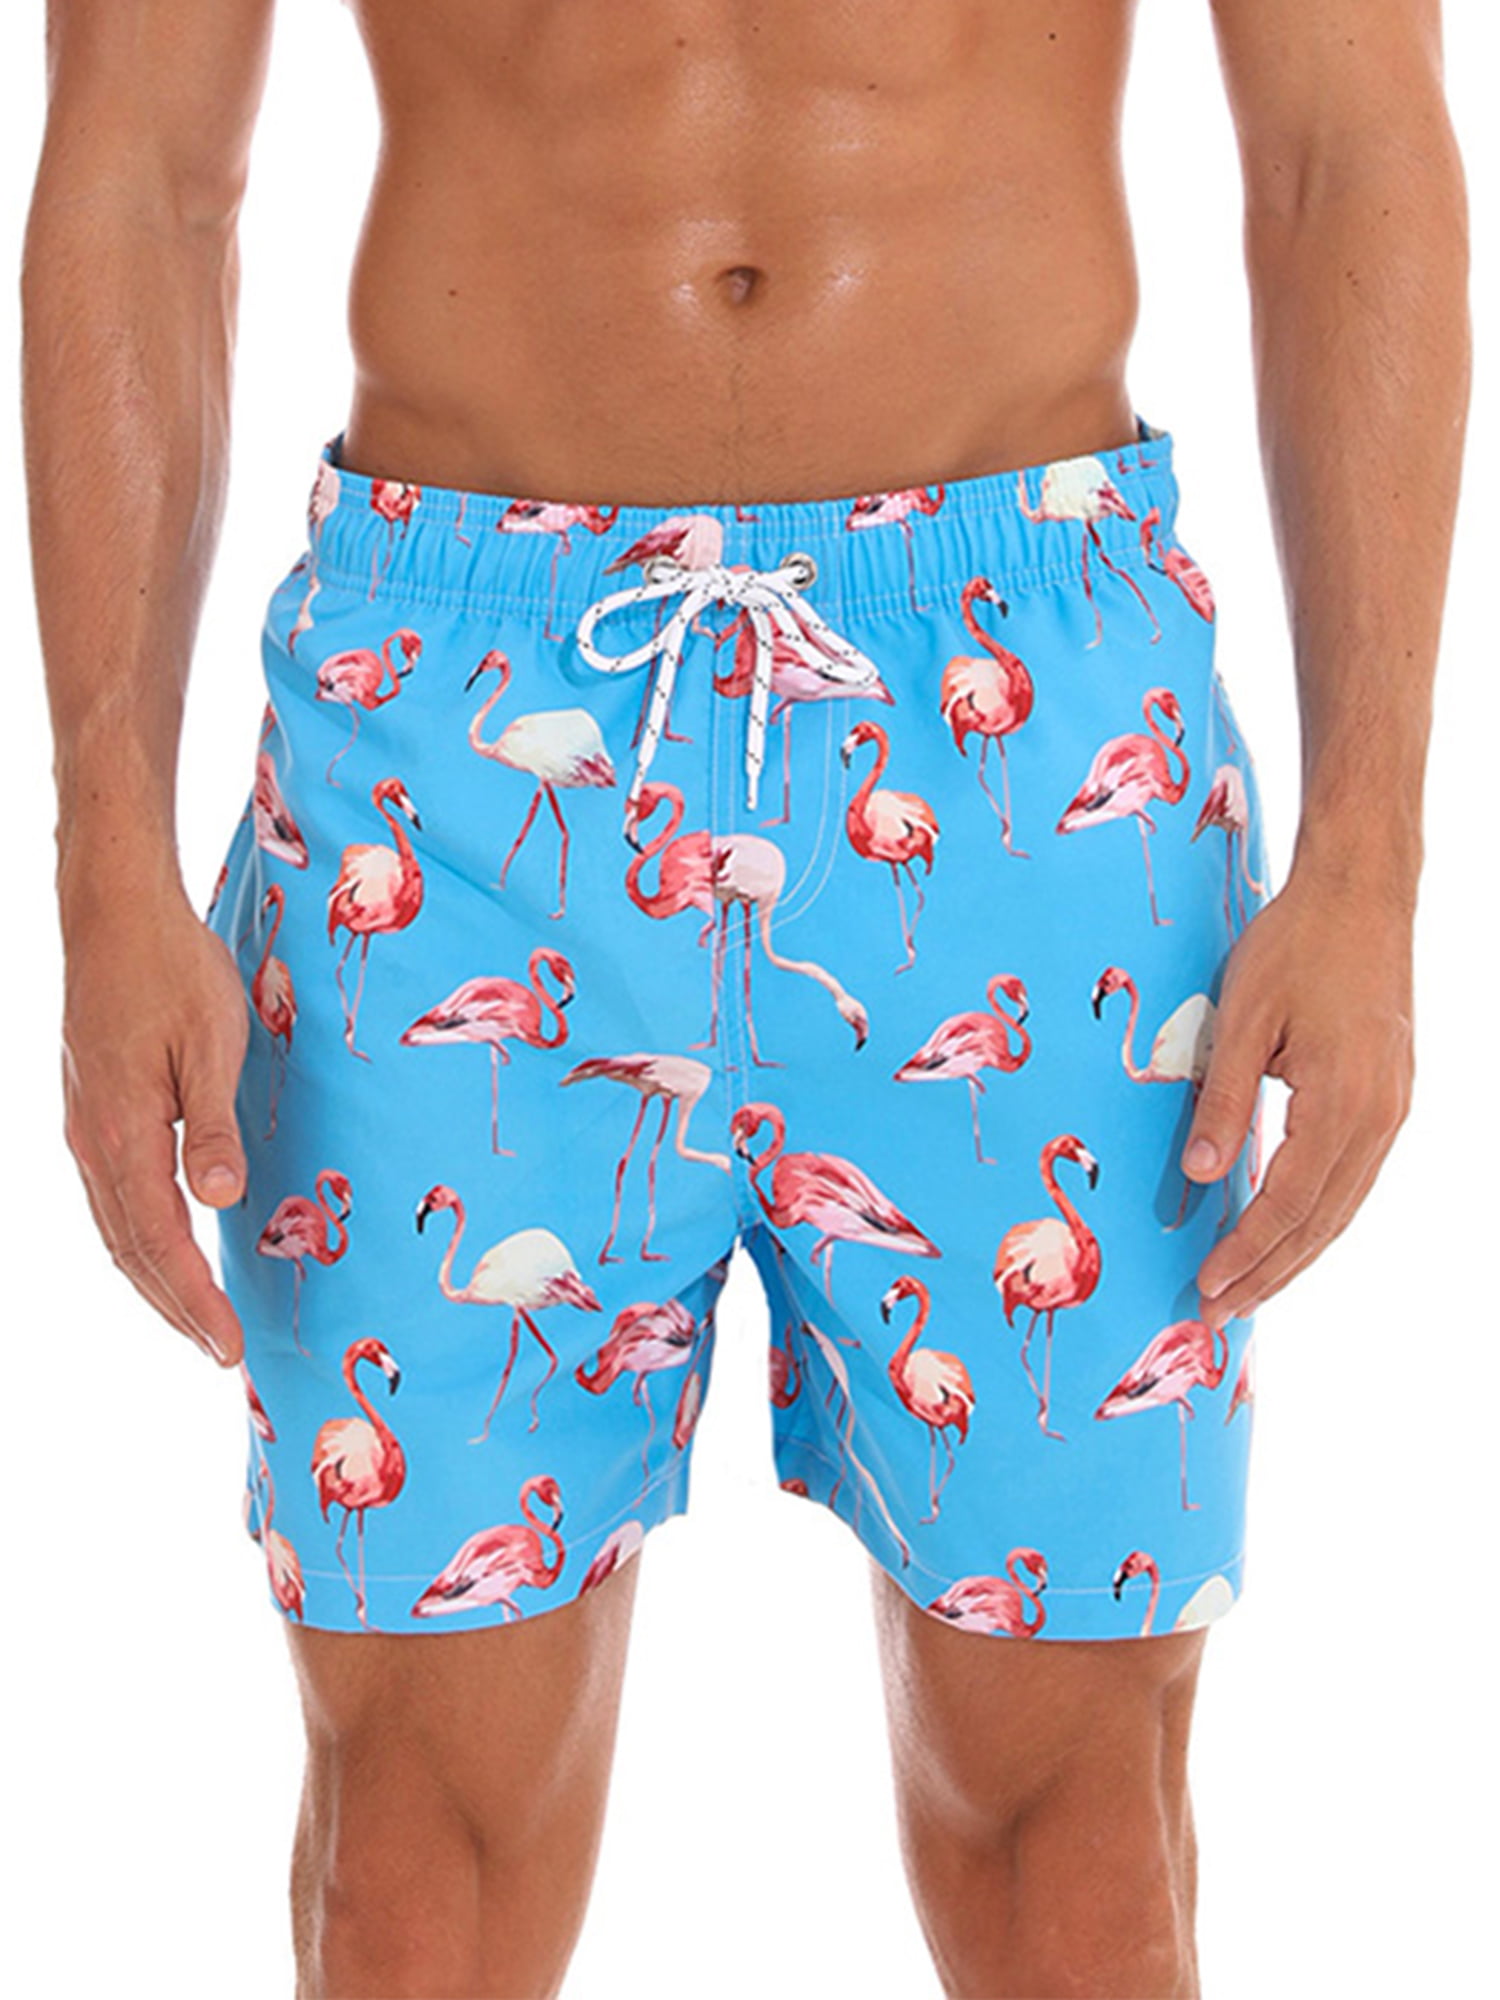 YOIGNG Boardshorts Summer Flamingos Mens Quick Dry Swim Trunks Beach Shorts 